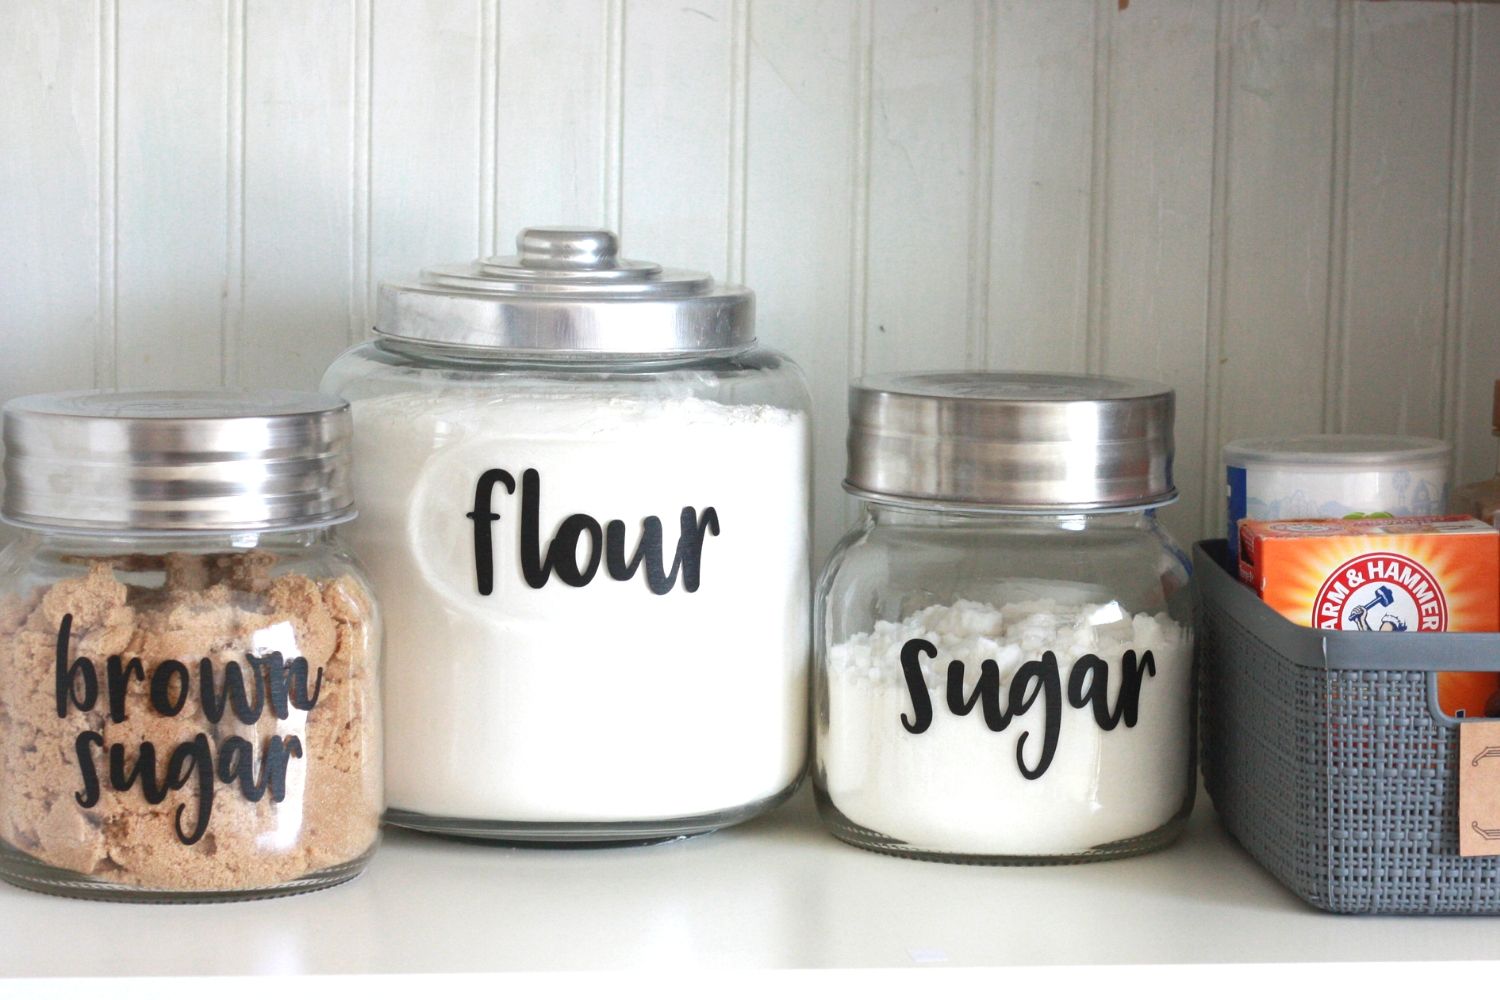 http://www.everydayjenny.com/wp-content/uploads/2019/08/Pantry-labels-brown-sugar-sugar-flour-with-cricut-vinyl-.jpg